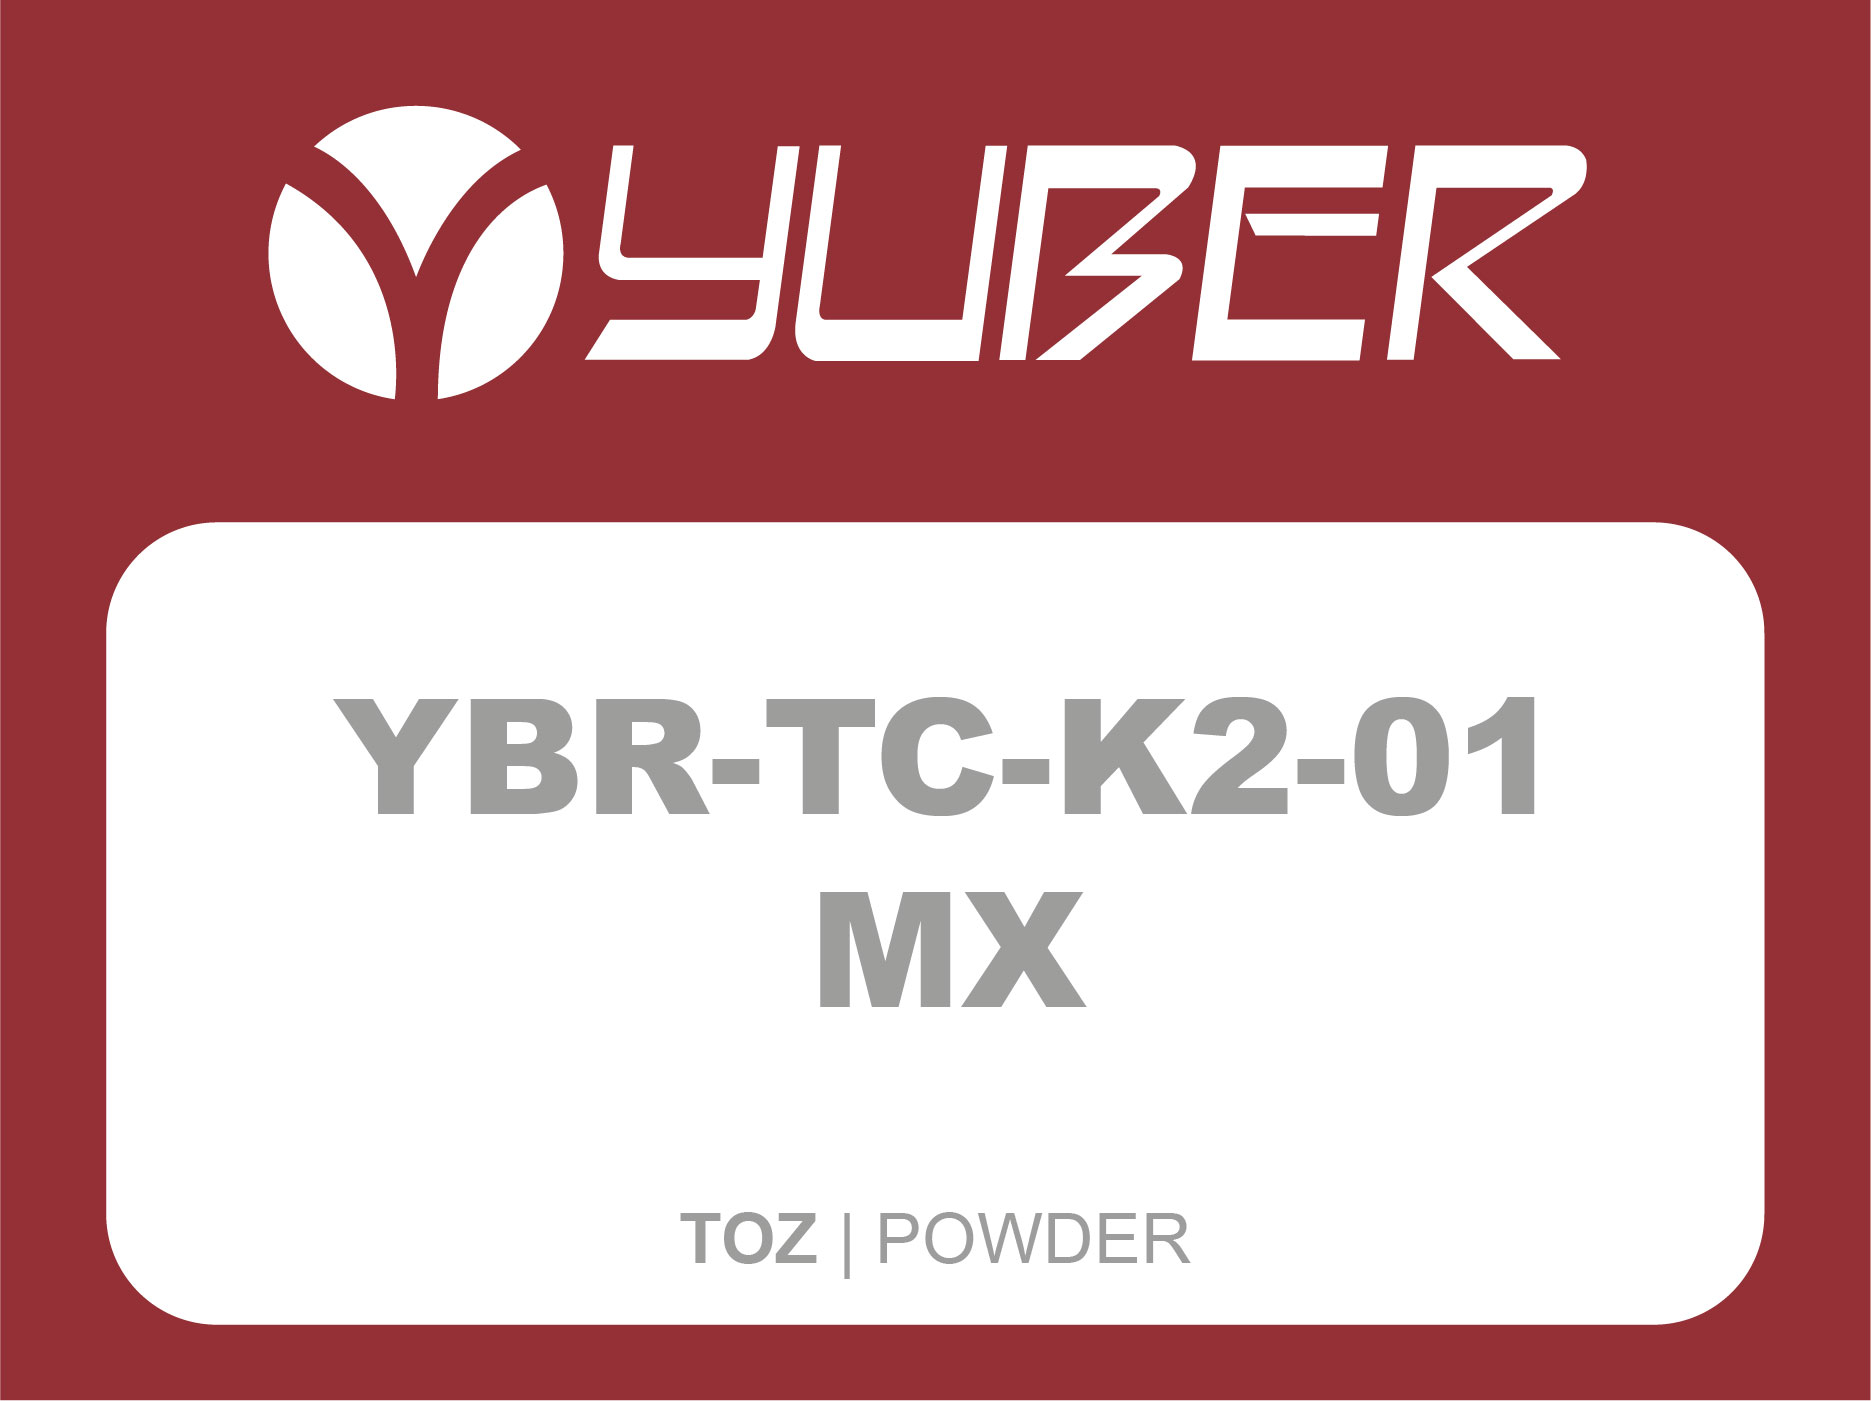 YBR TC k2 01 MX Toz Yuber Metalurji